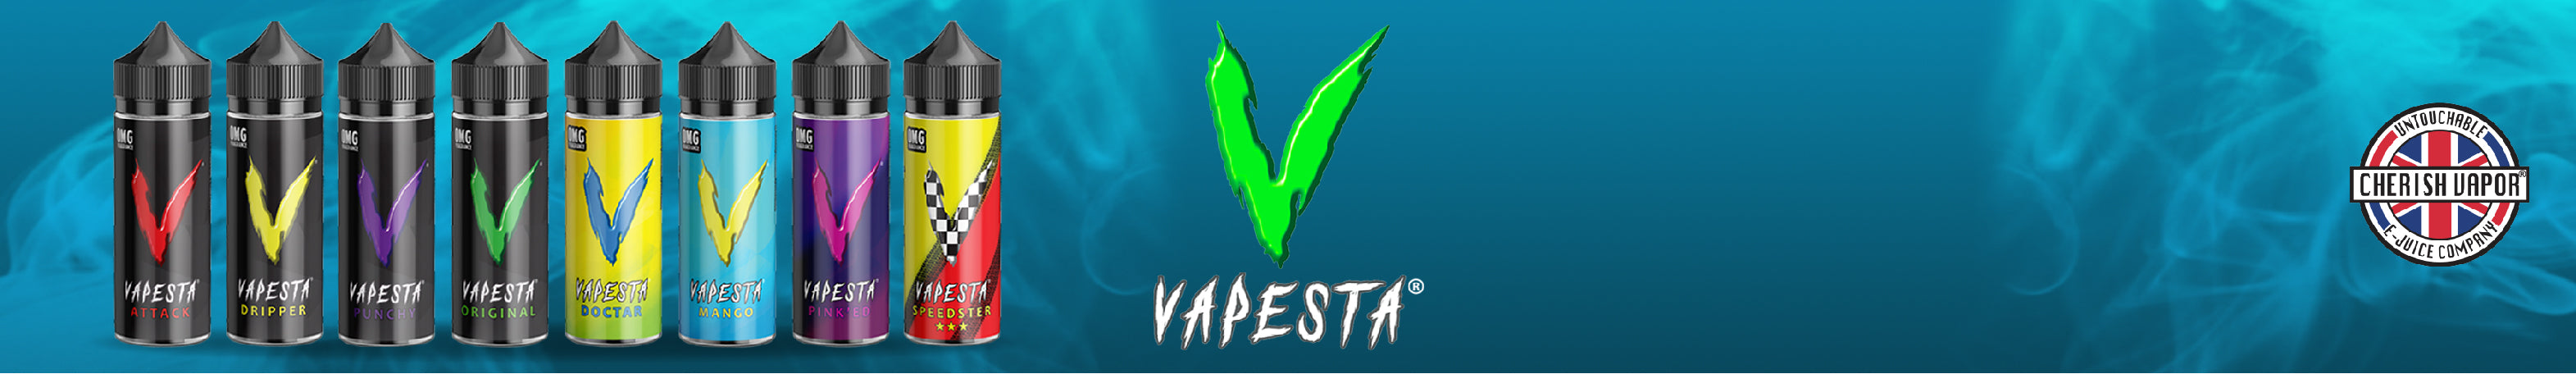 Vapesta E-liquid from Moreish Puff